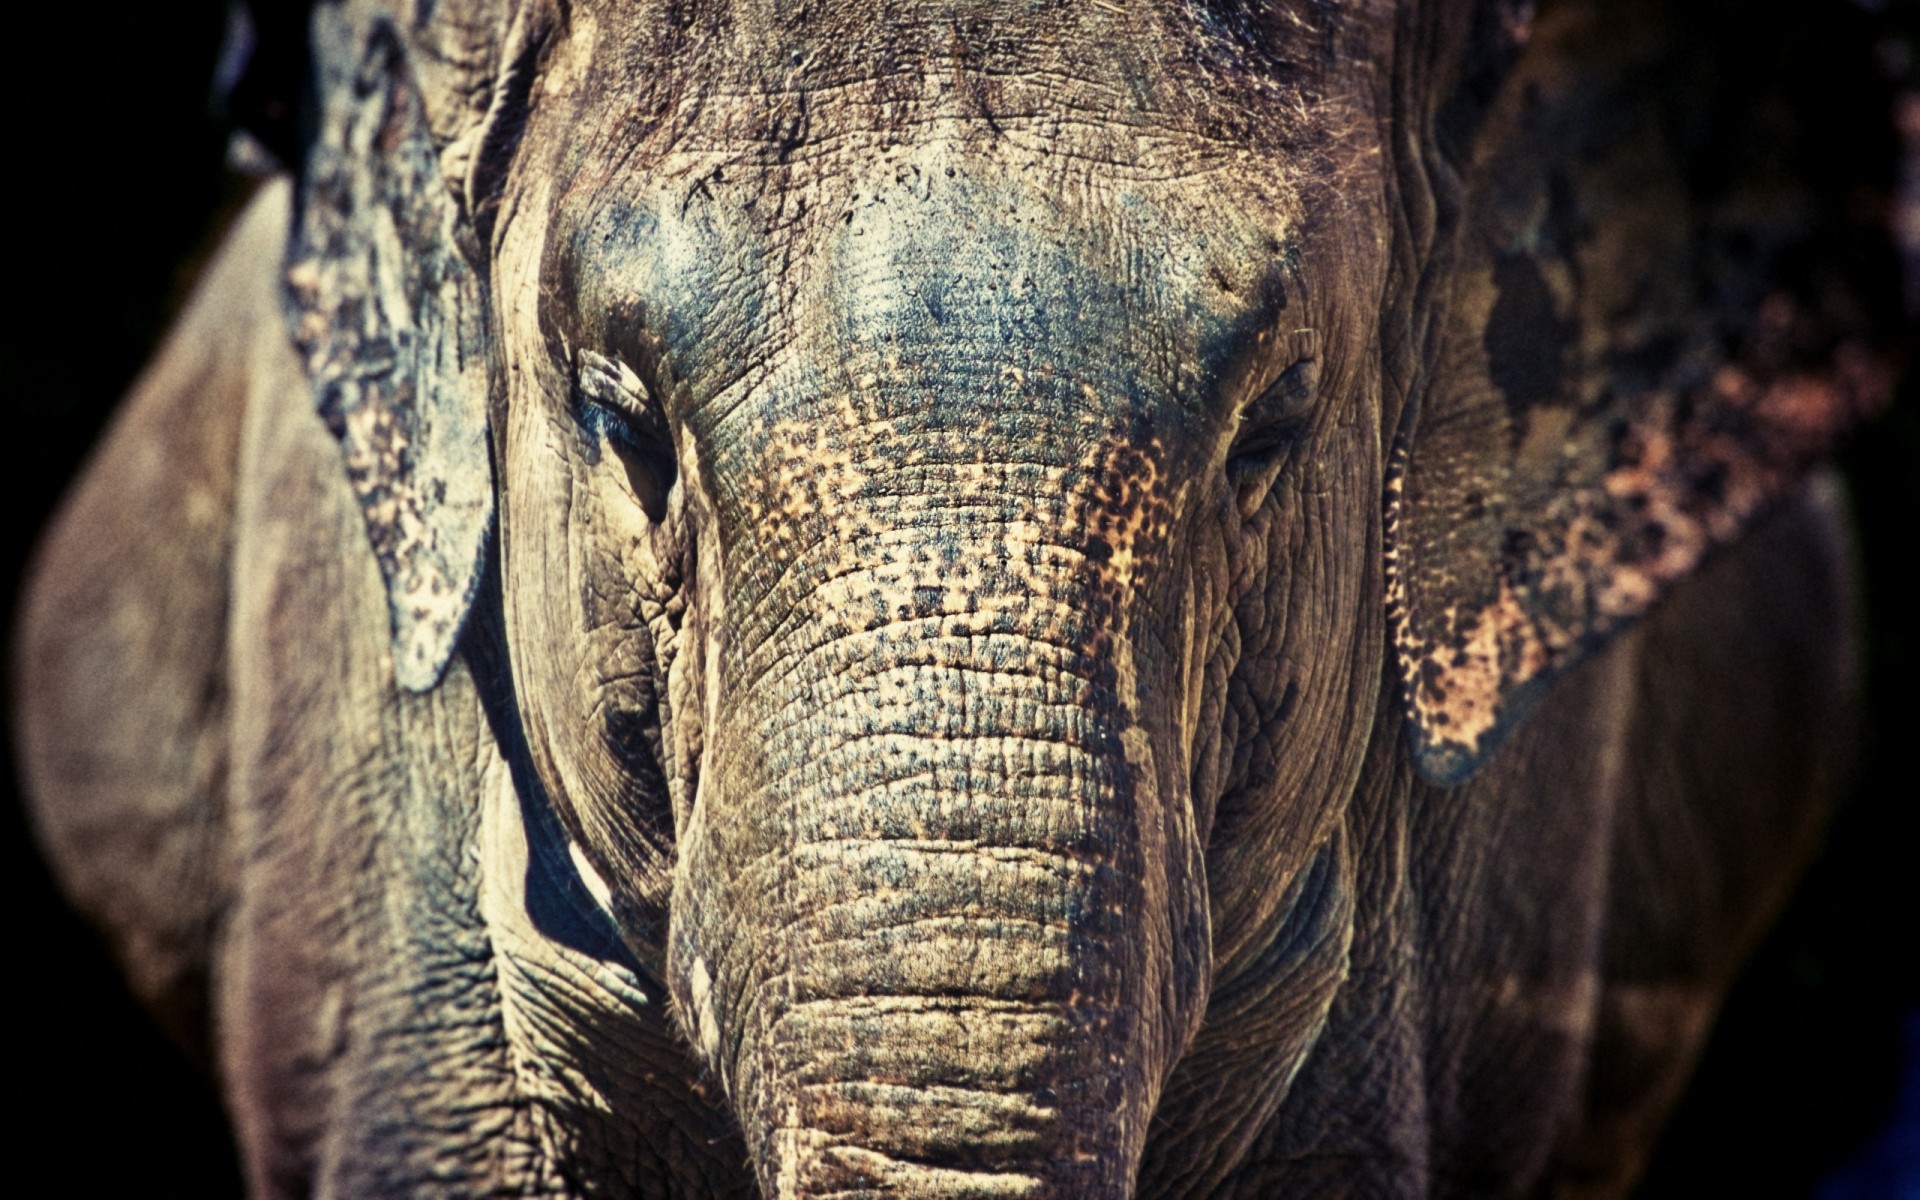 animals nature old head elephant animal skin close-up texture wildlife